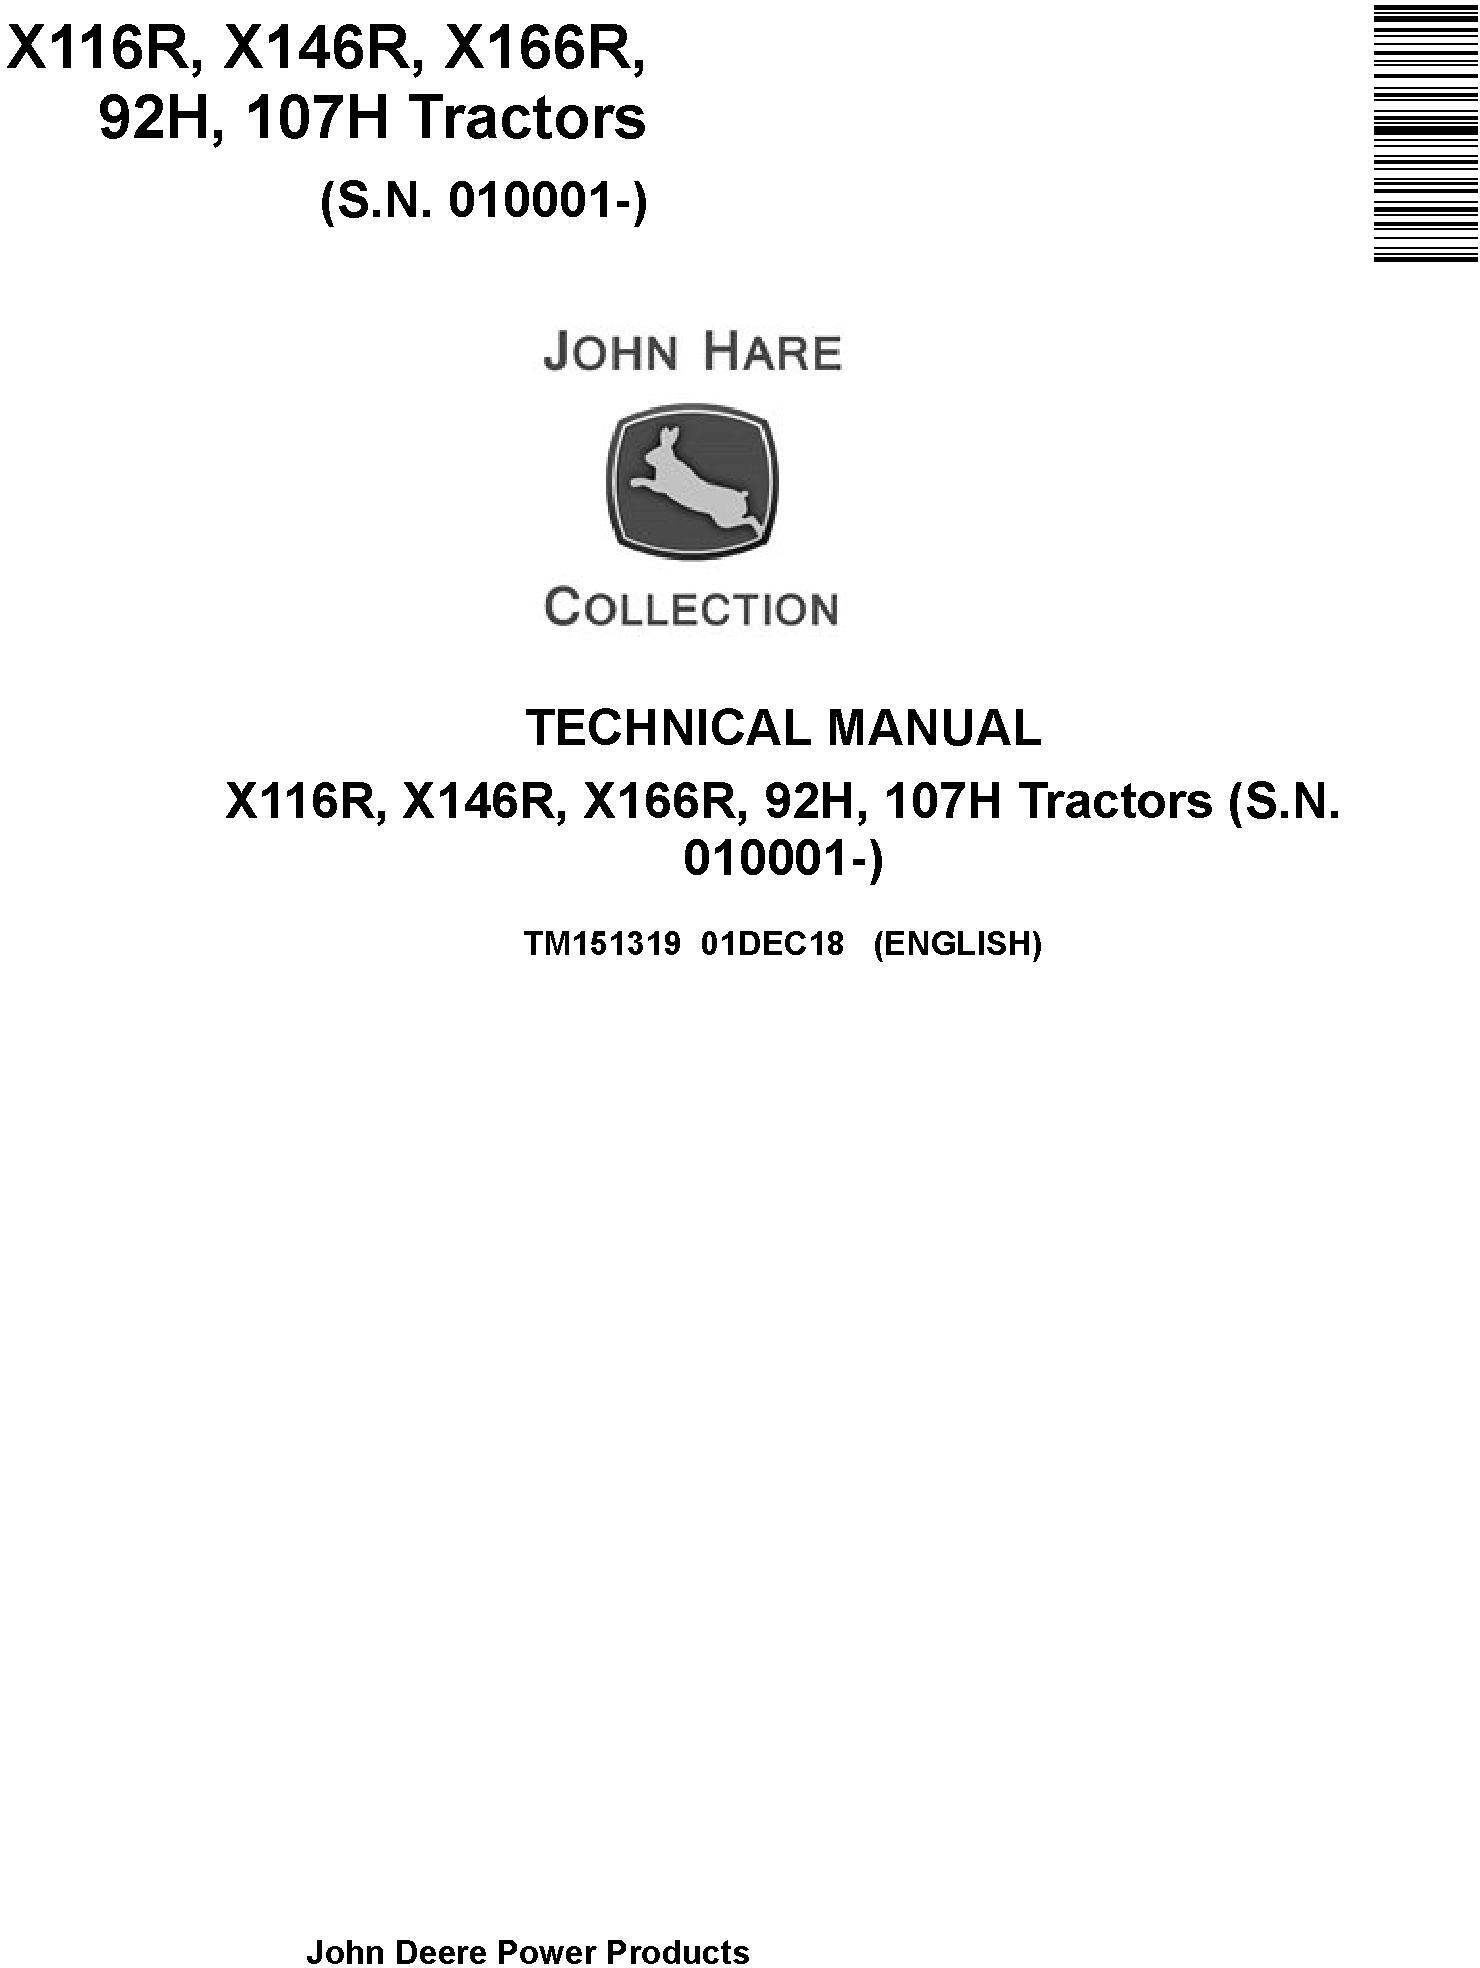 John Deere X116R X146R X166R 92H 107H Tractor Technical Manual TM151319